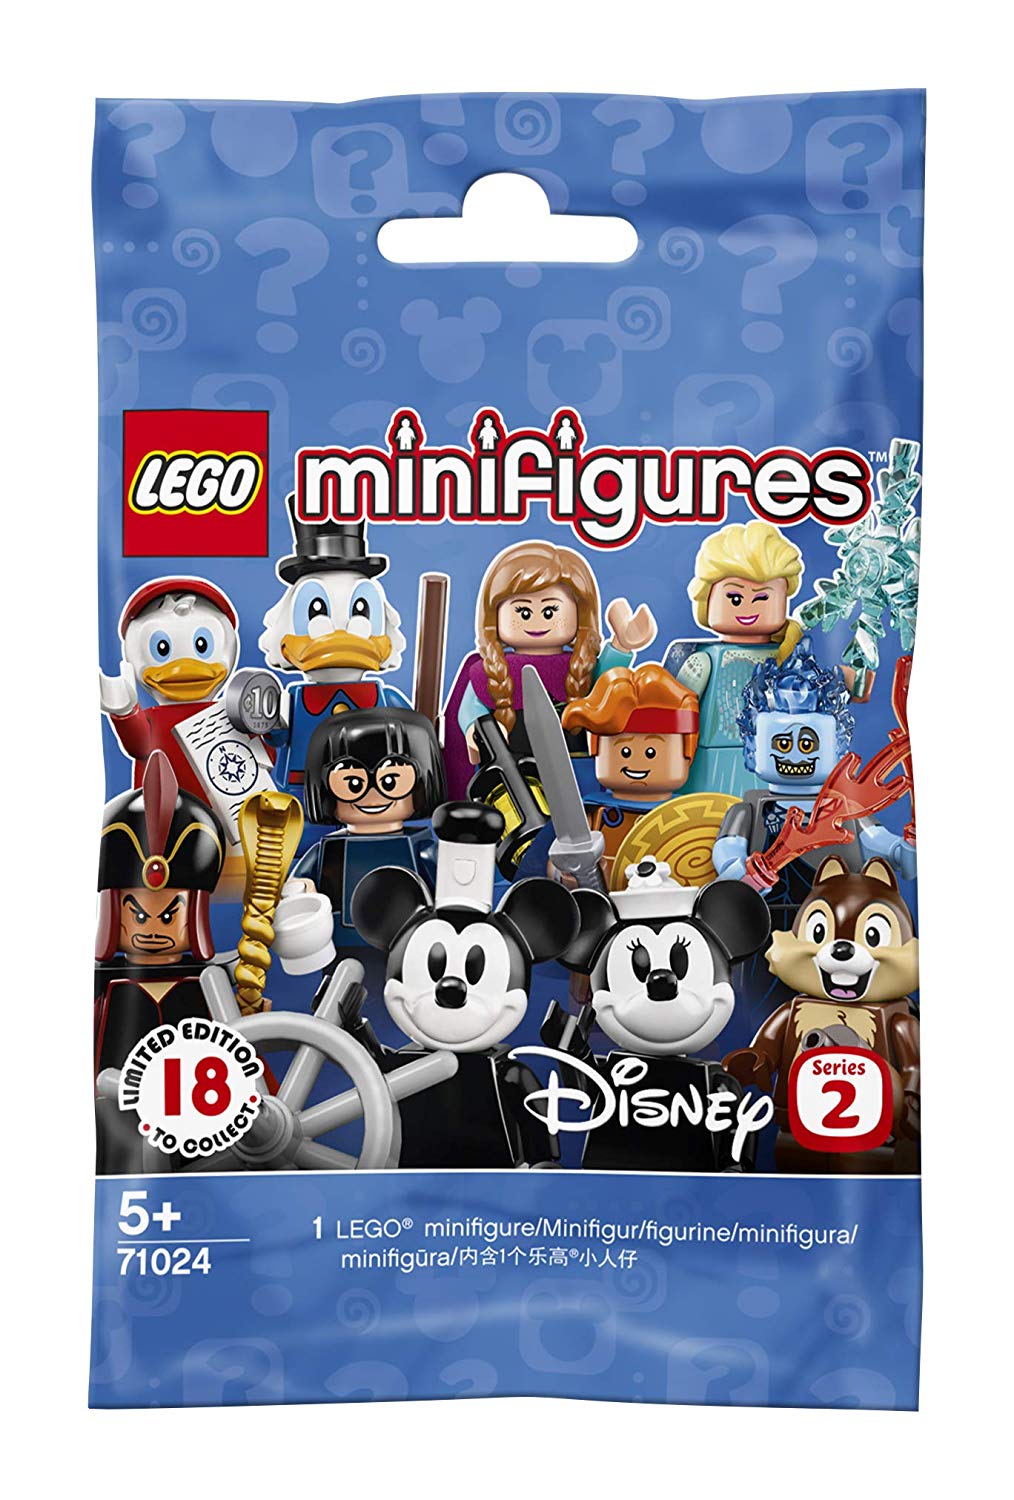 Lego 71024 - Minifigures Disney Series 2, Kit (1 Minifigure)